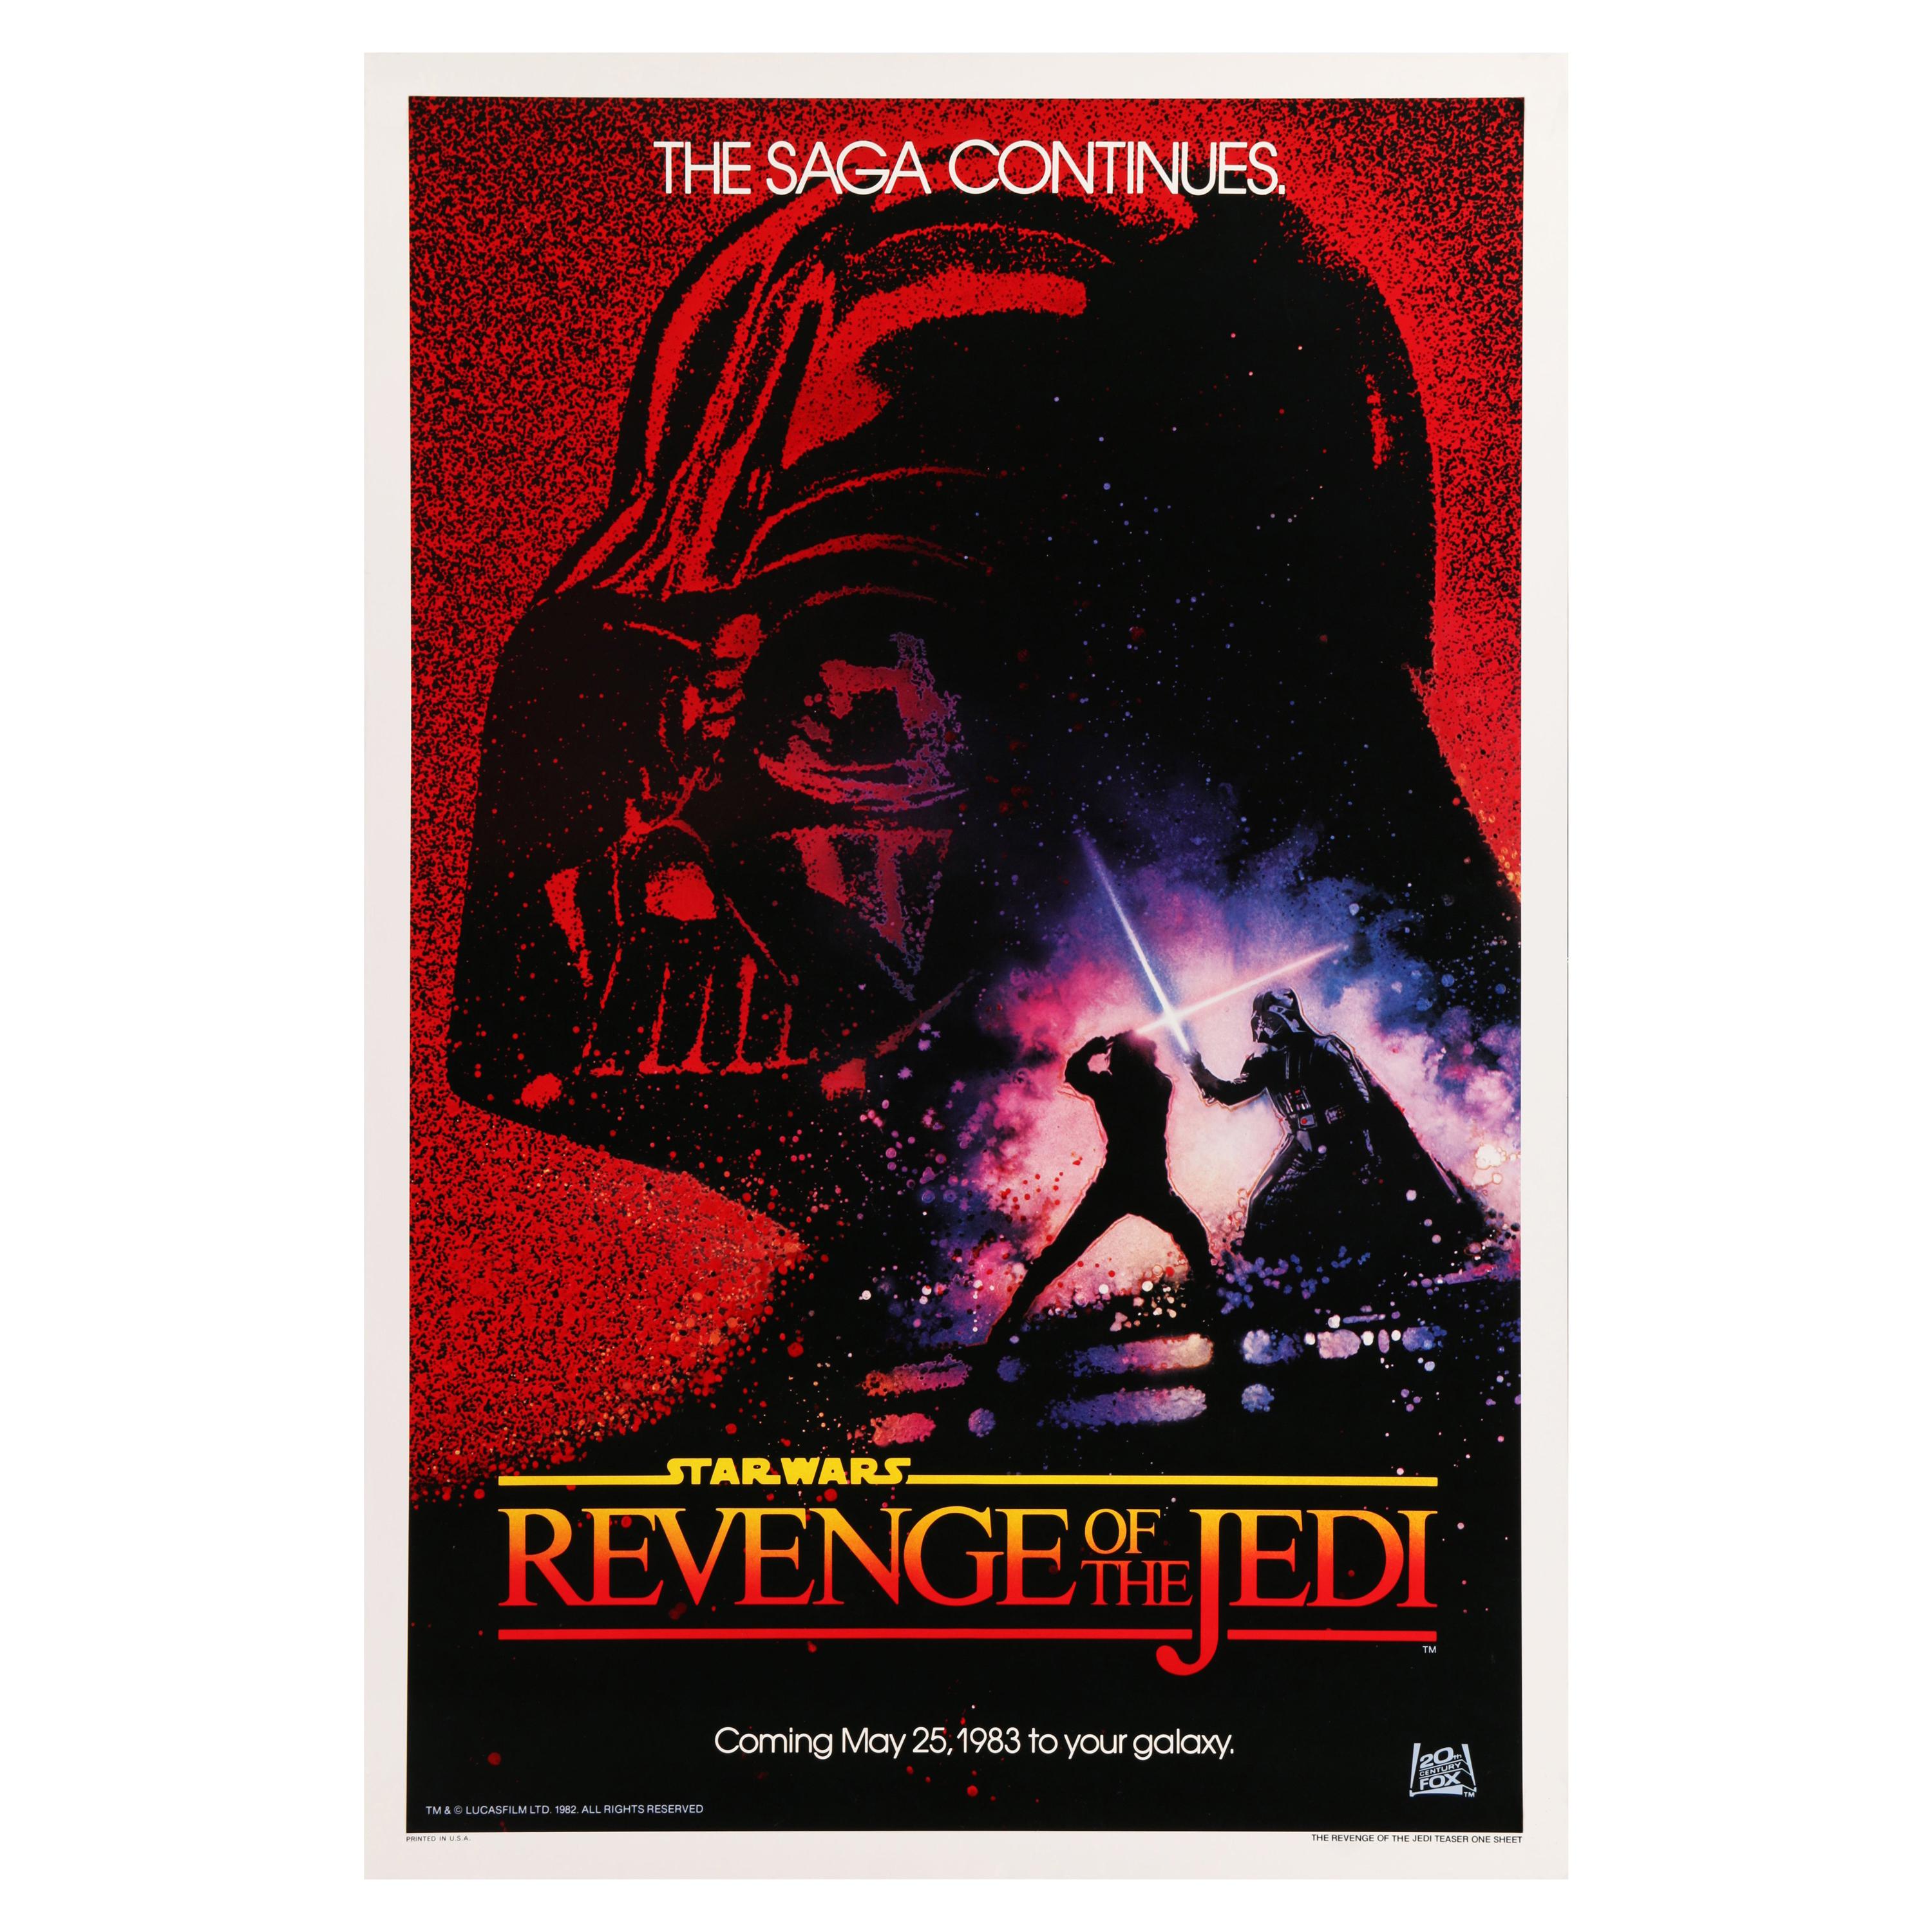 Star Wars "Return of the Jedi" Original Vintage US One Sheet Movie Poster, 1983